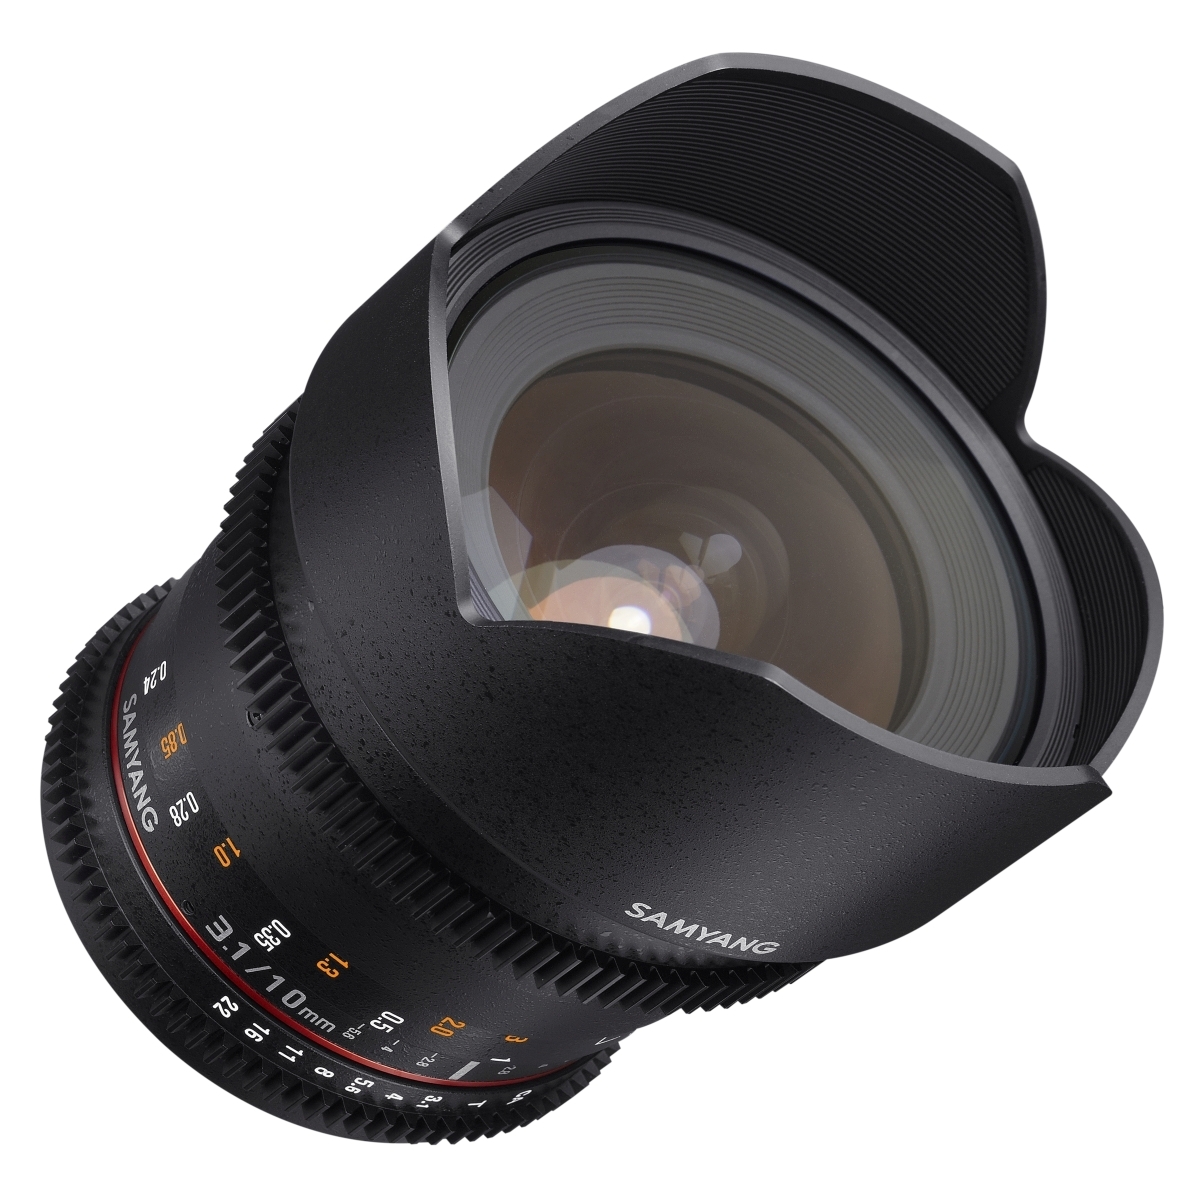 Samyang MF 10 mm 1:3,1 Video für Canon EF-S